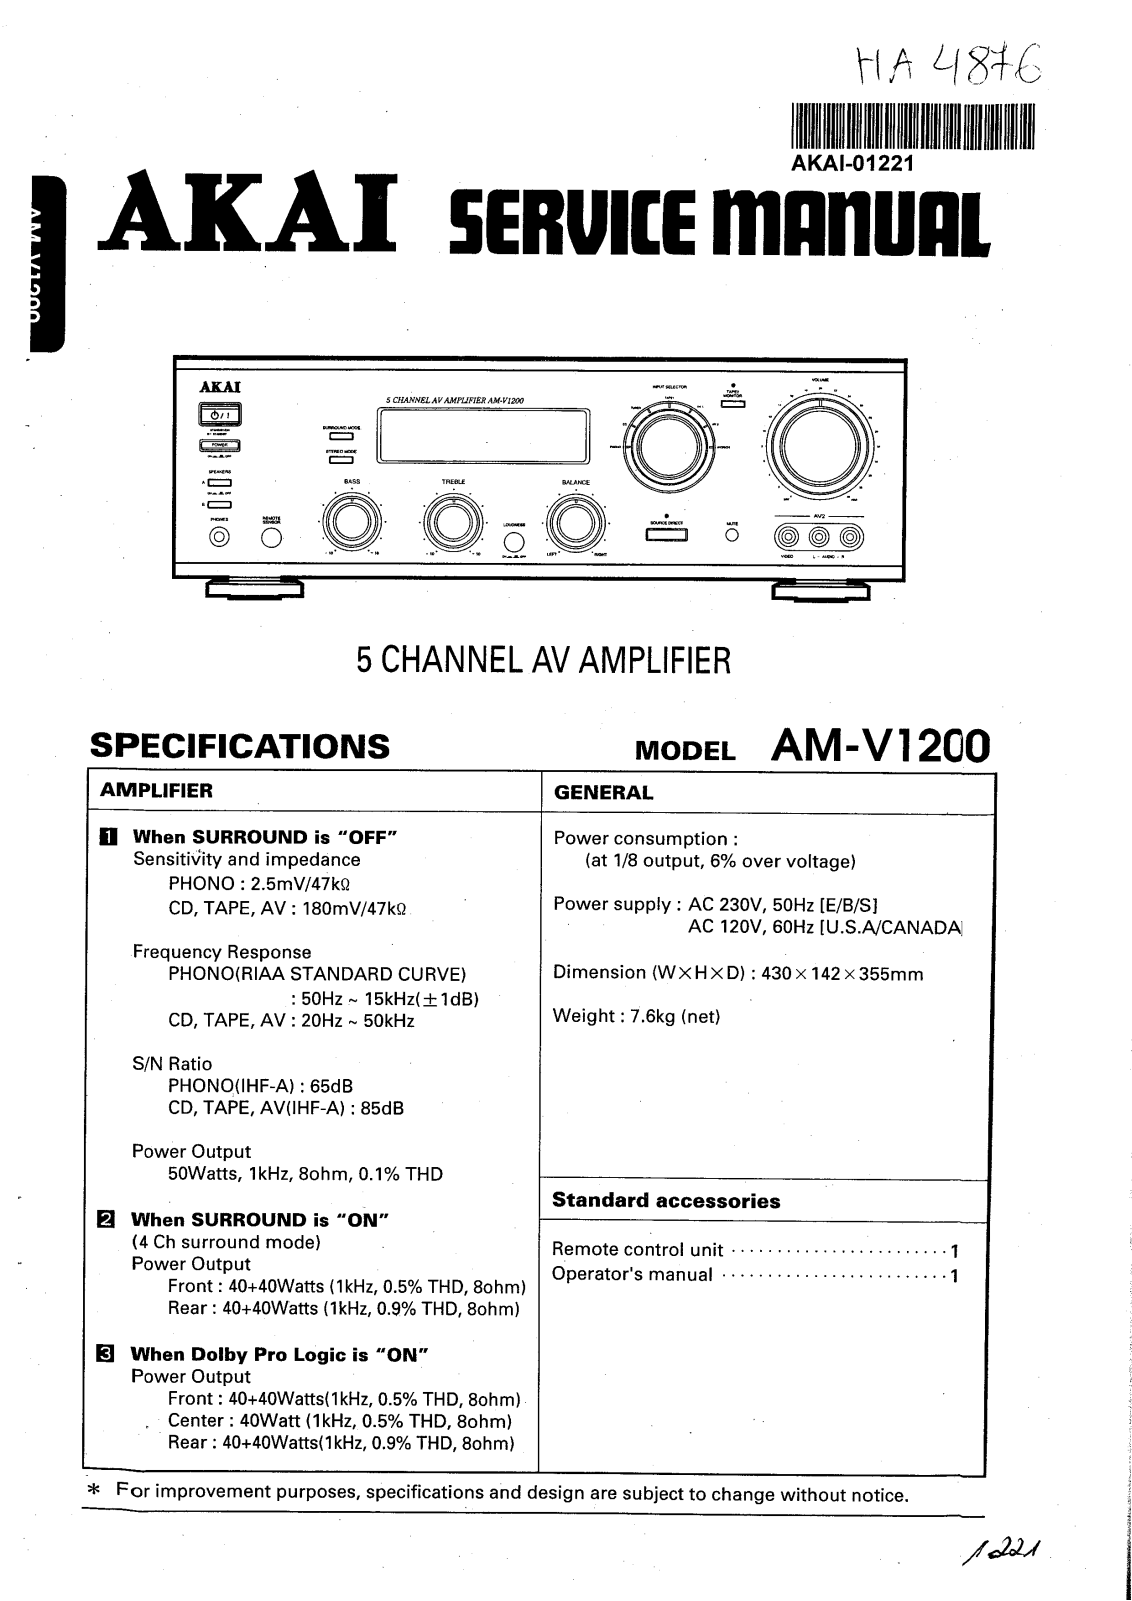 Akai AMV-1200 Service manual